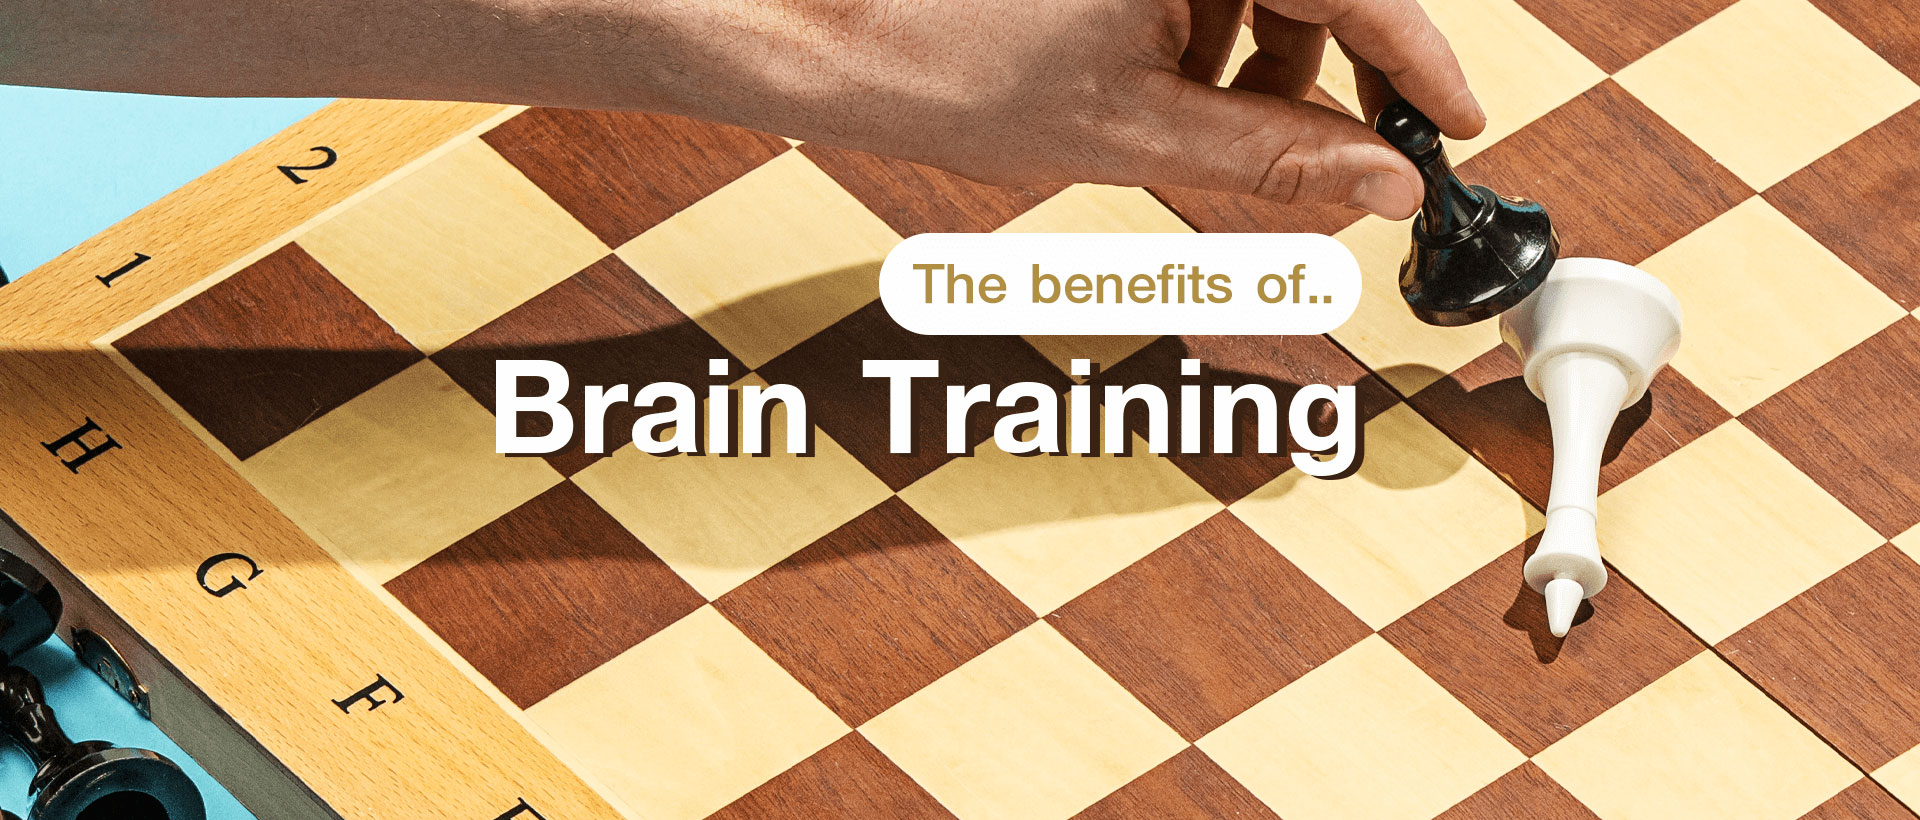 The benefits of brain training